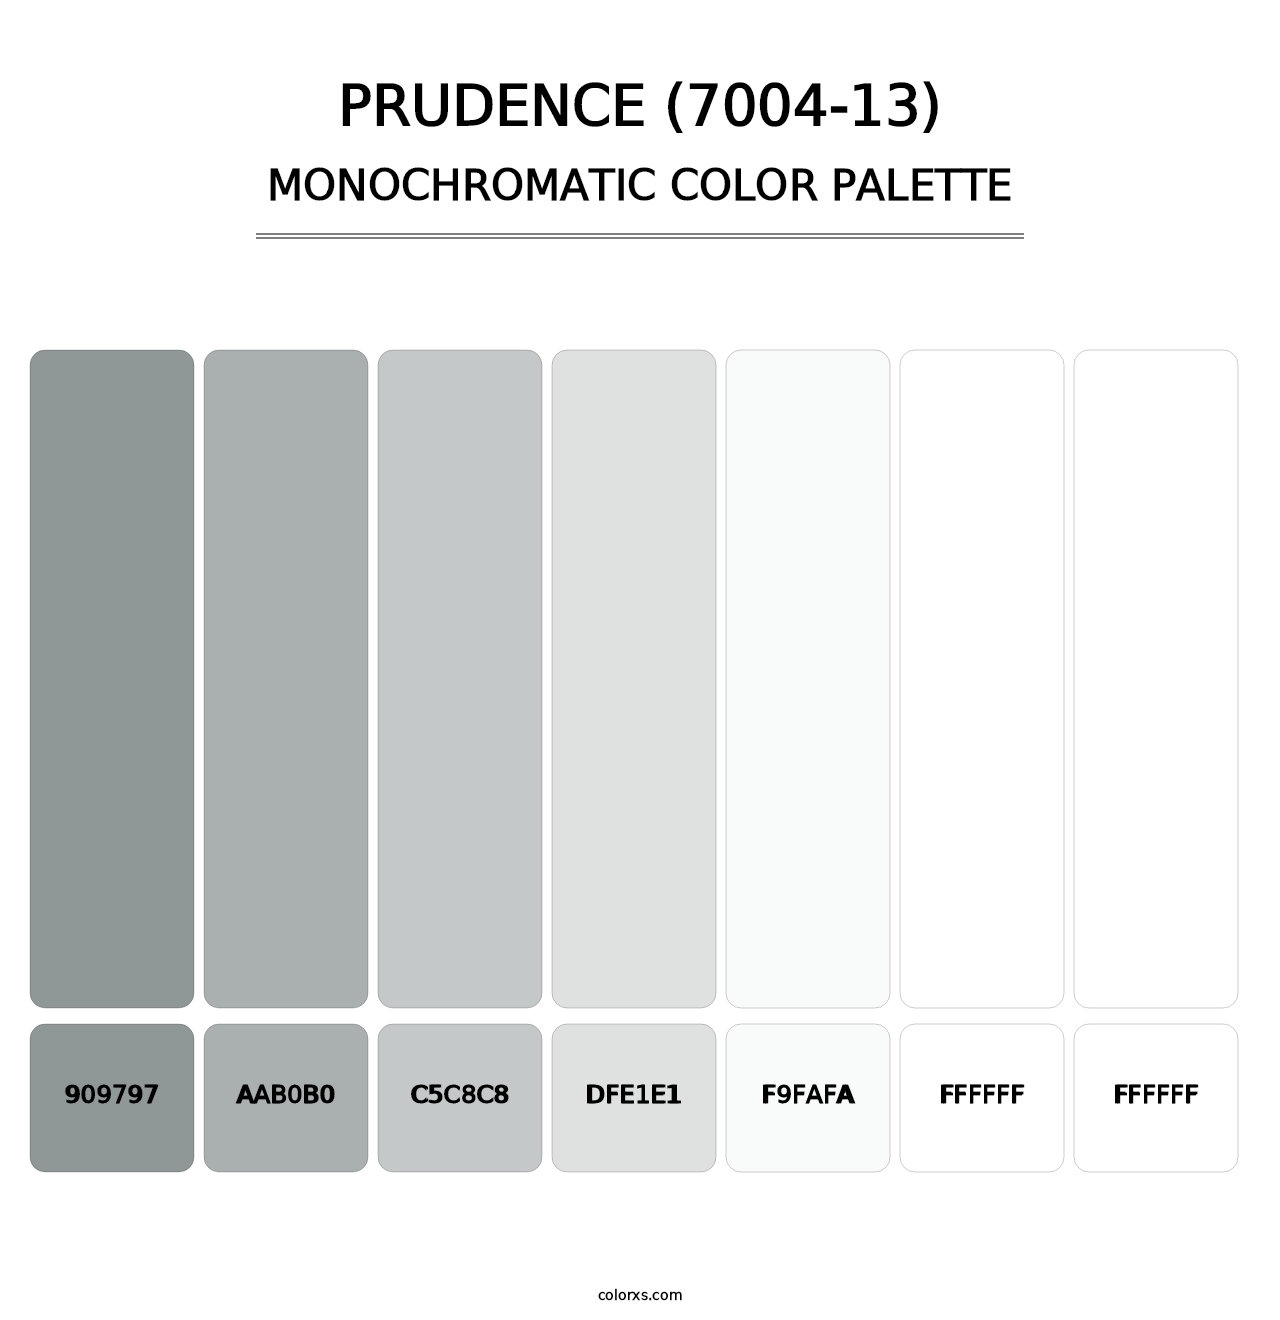 Prudence (7004-13) - Monochromatic Color Palette